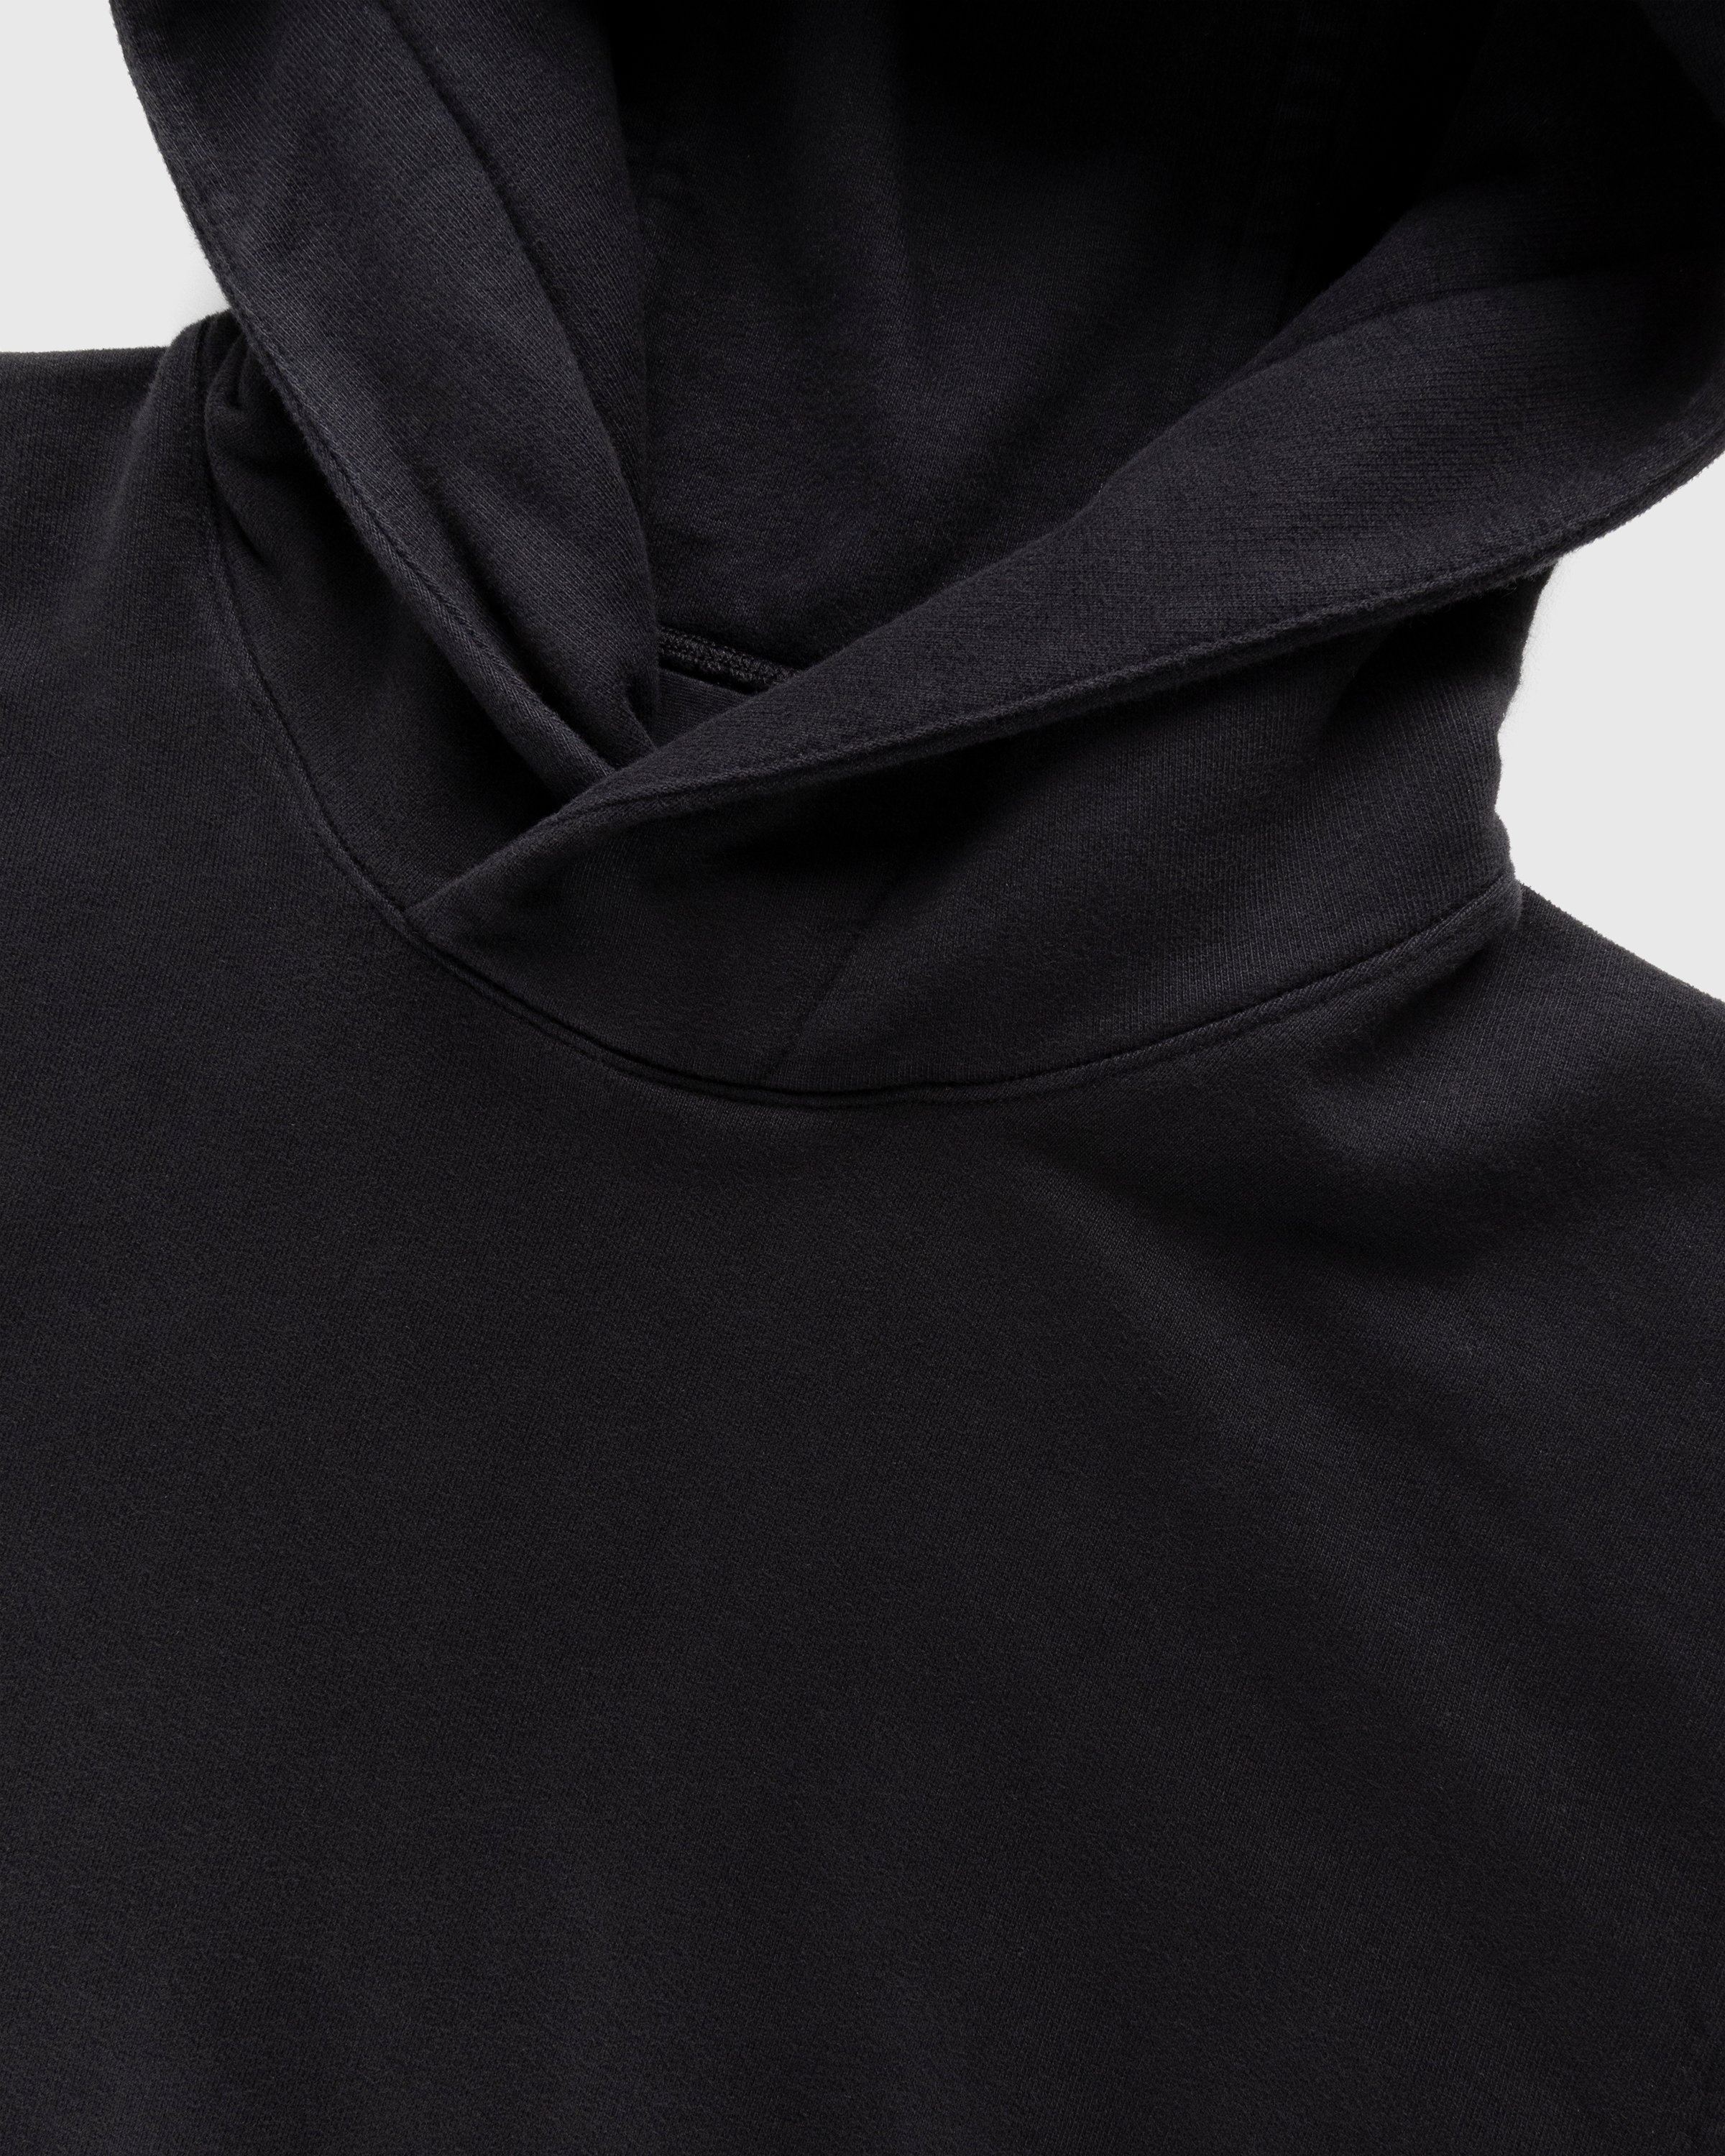 Stone Island – Garment-Dyed Fleece Hoodie Black - Sweats - Black - Image 3